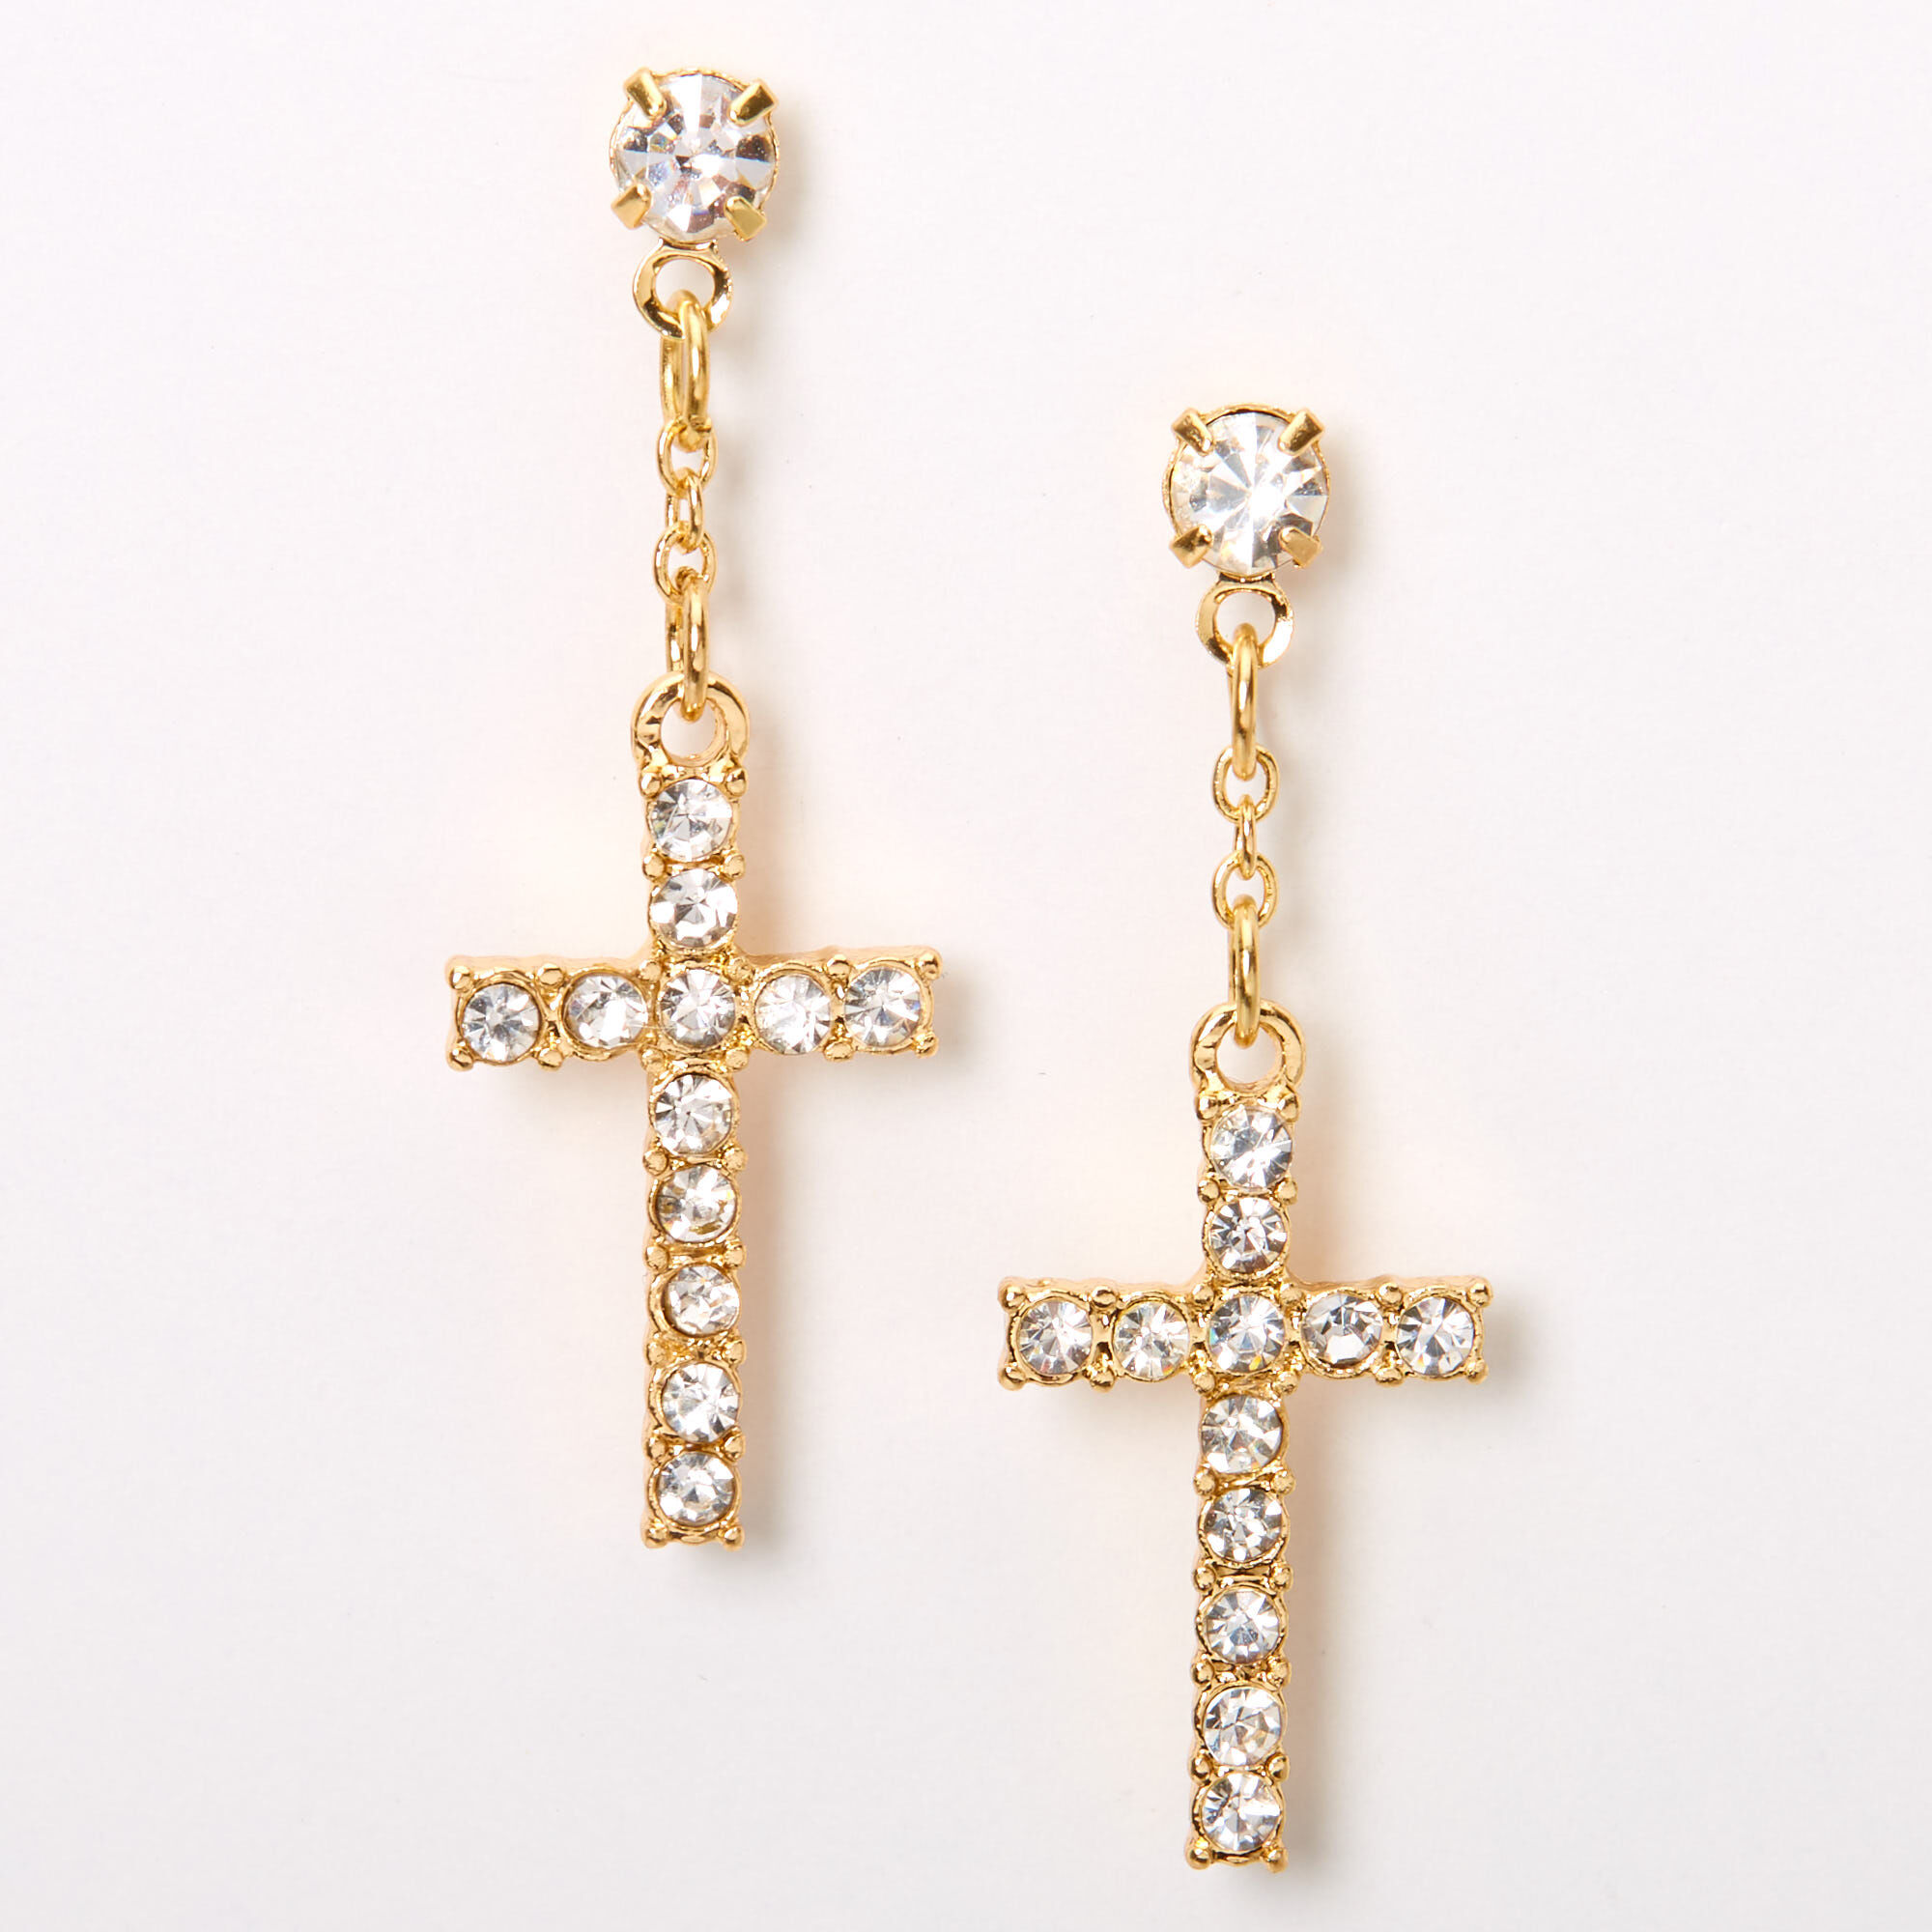 Details more than 101 gold dangle earrings cross